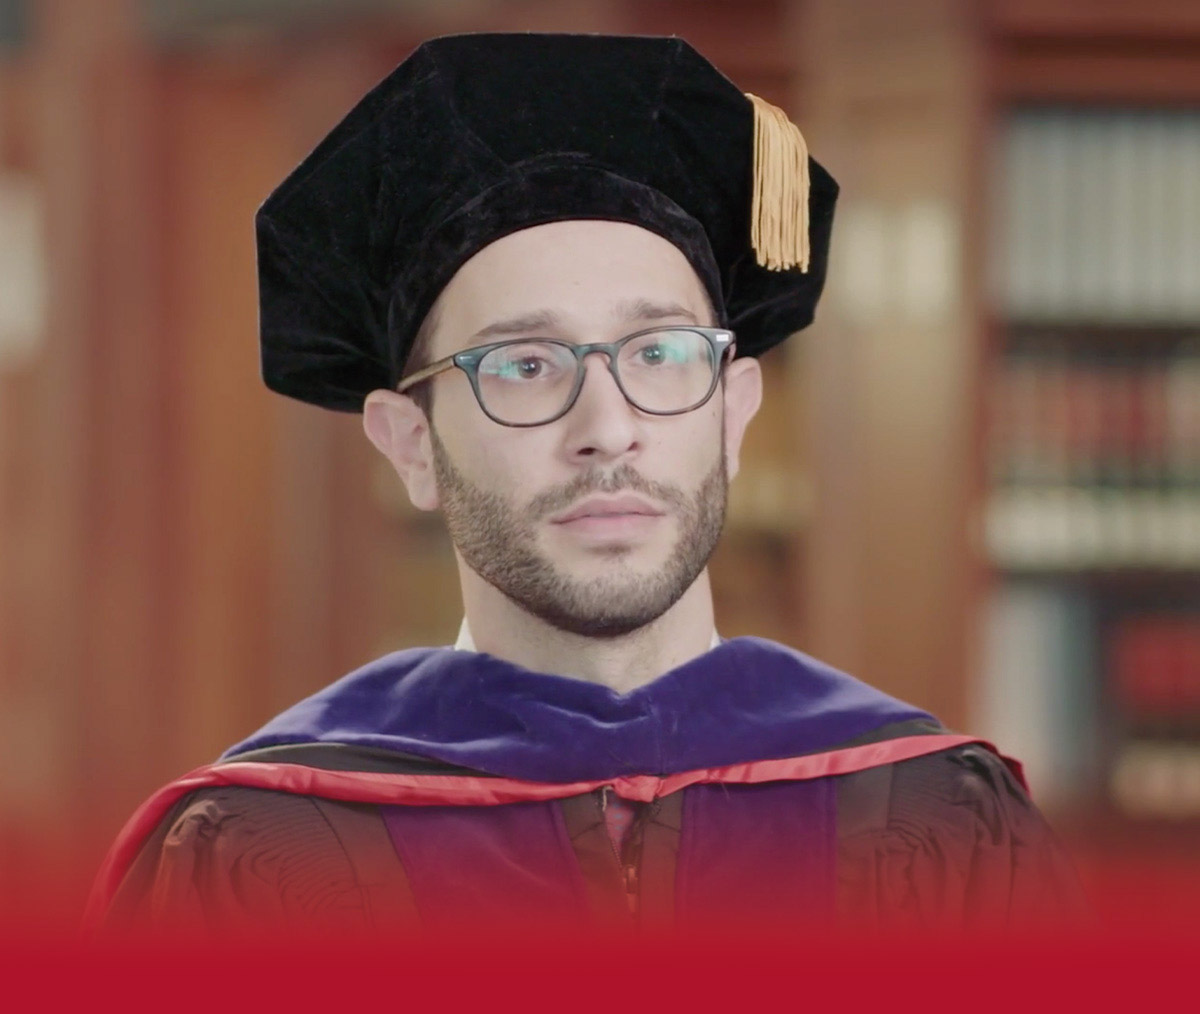 Jordan Khorshad in his graduation cap and gown